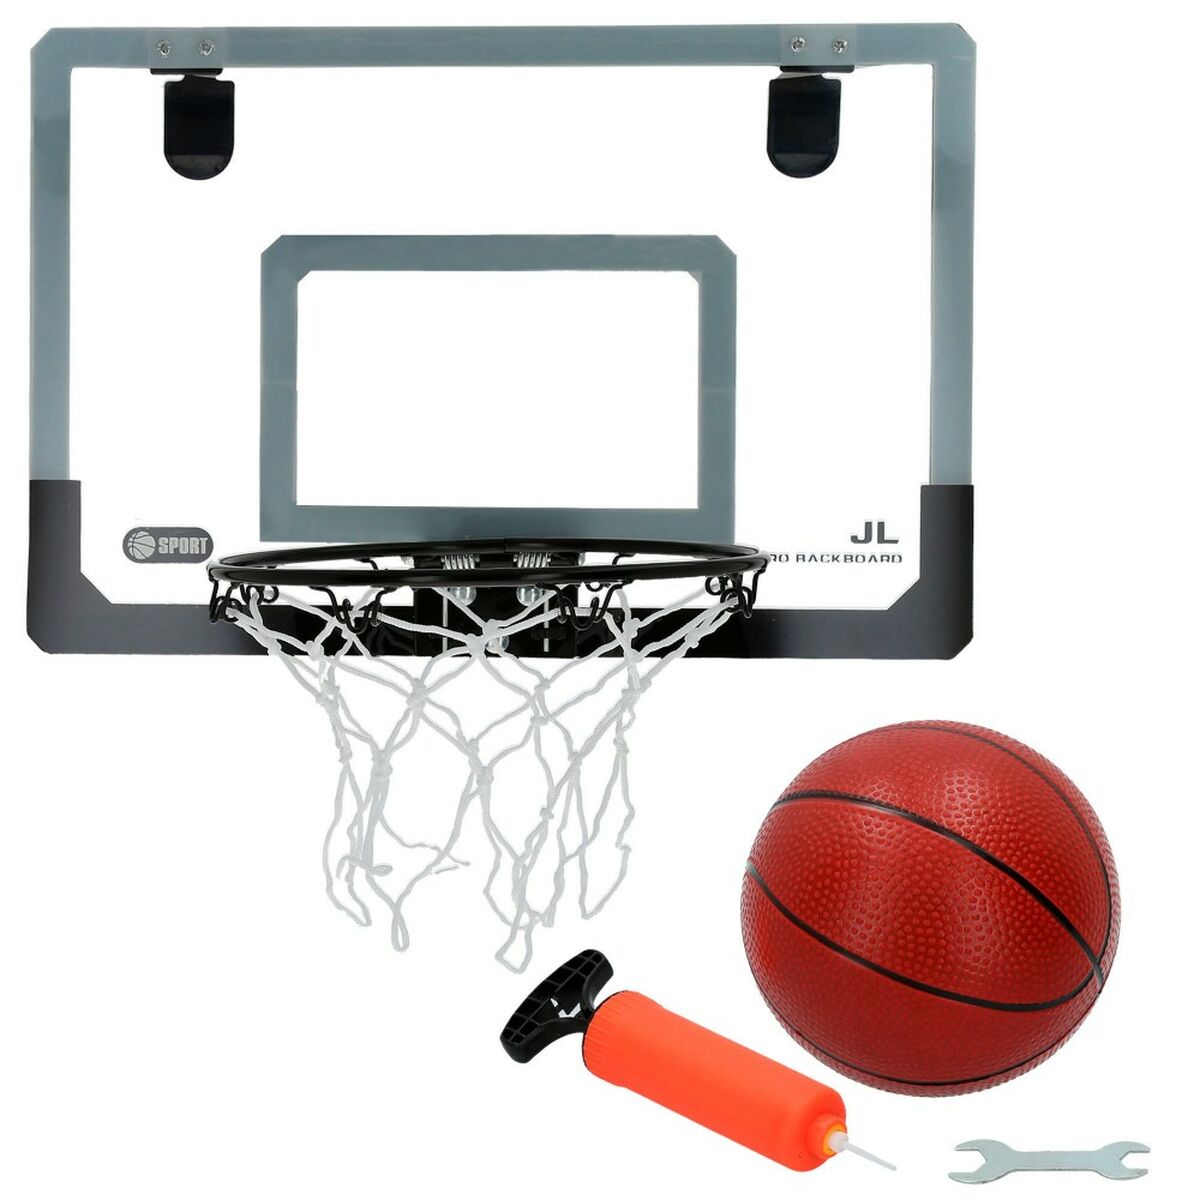 Basketball Basket Colorbaby Sport 45,5 x 30,5 x 41 cm (2 Units)